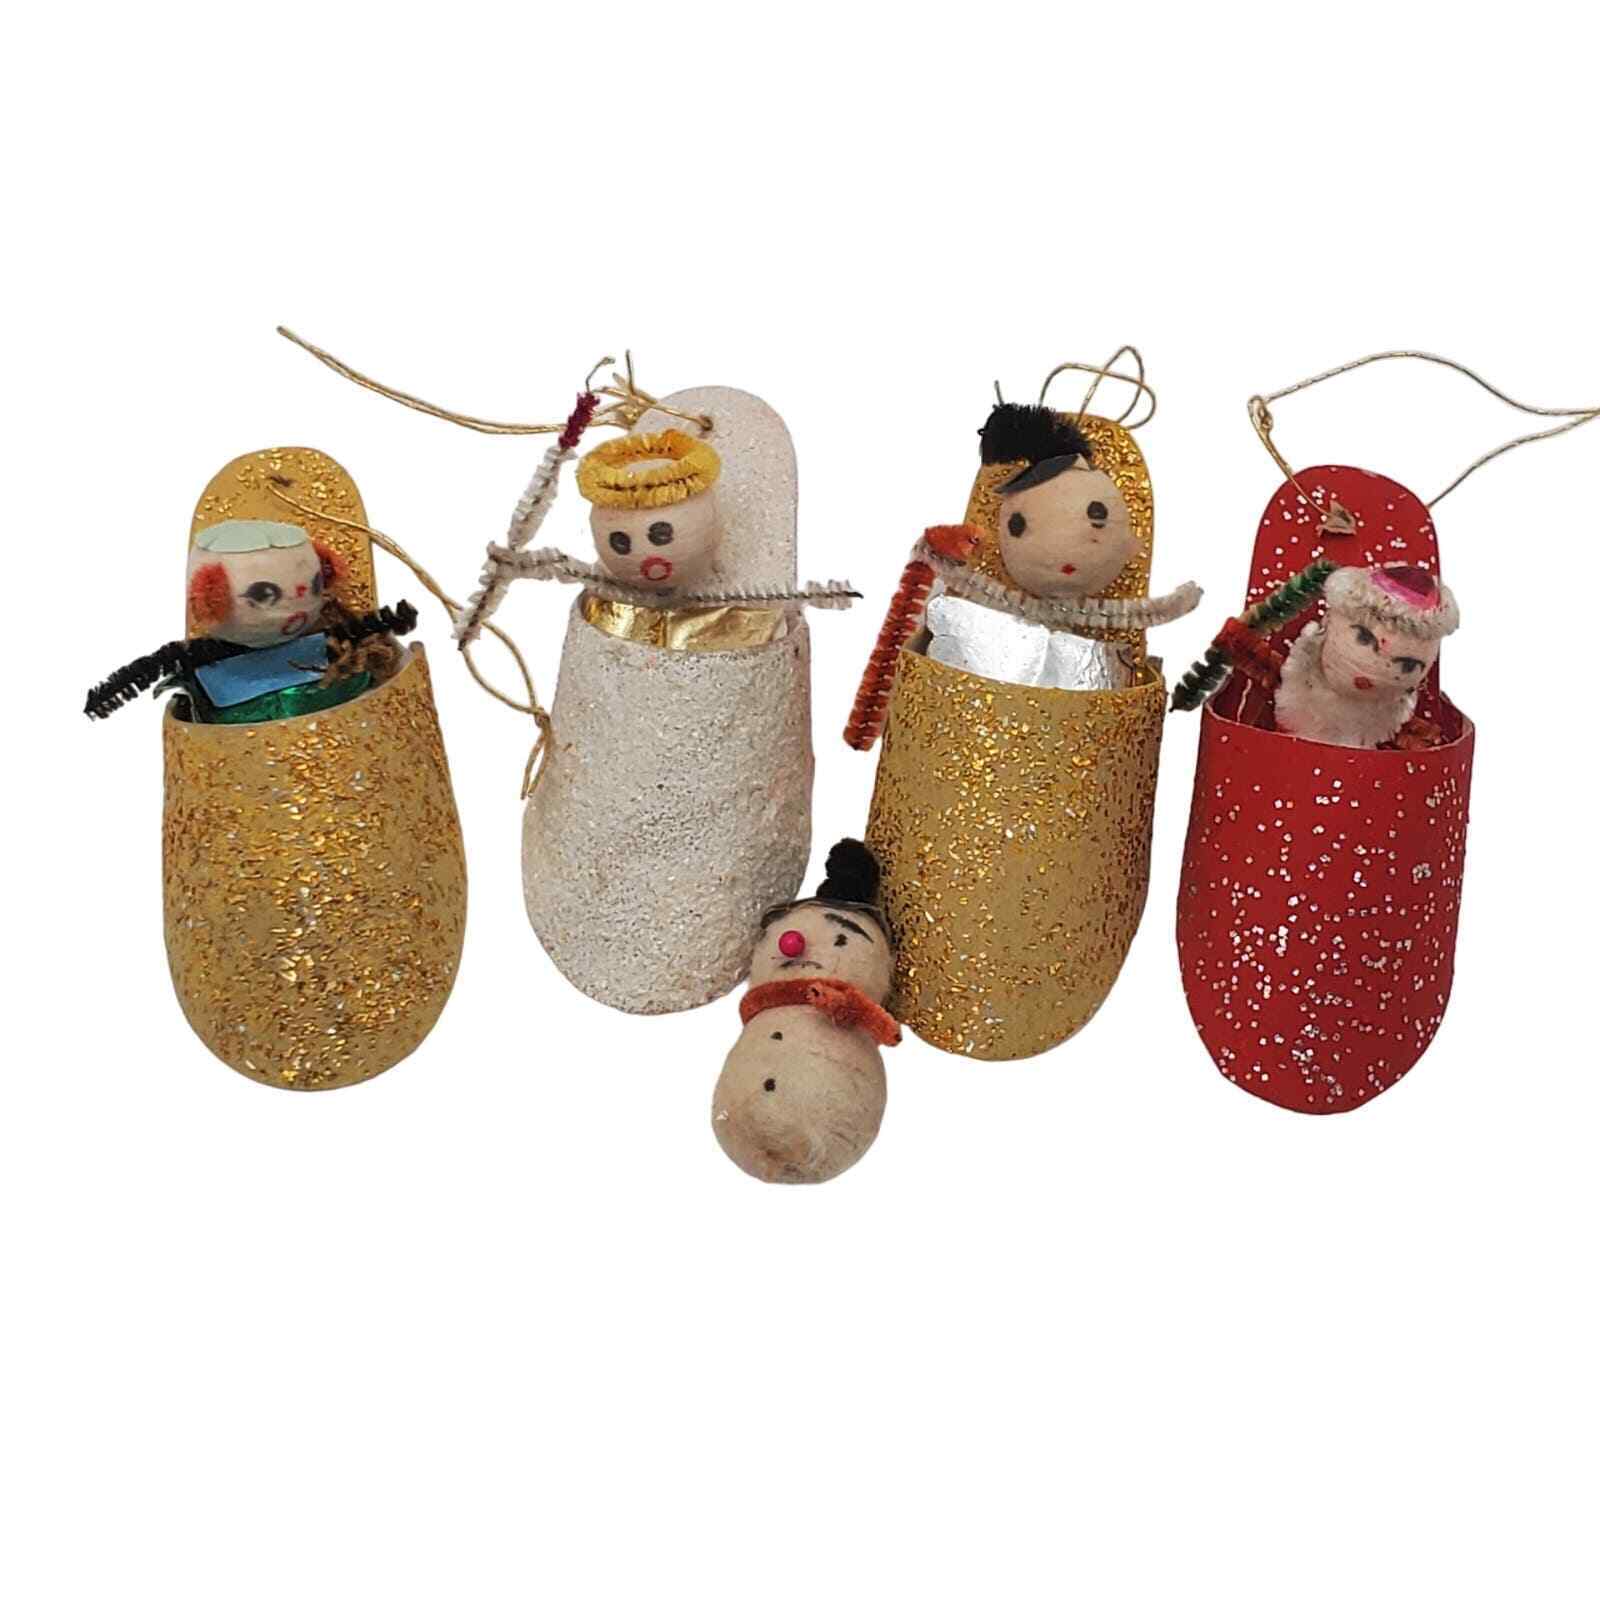 4 Vtg Spun Cotton Face Santa Snowman In Slipper Christmas Ornaments Japan